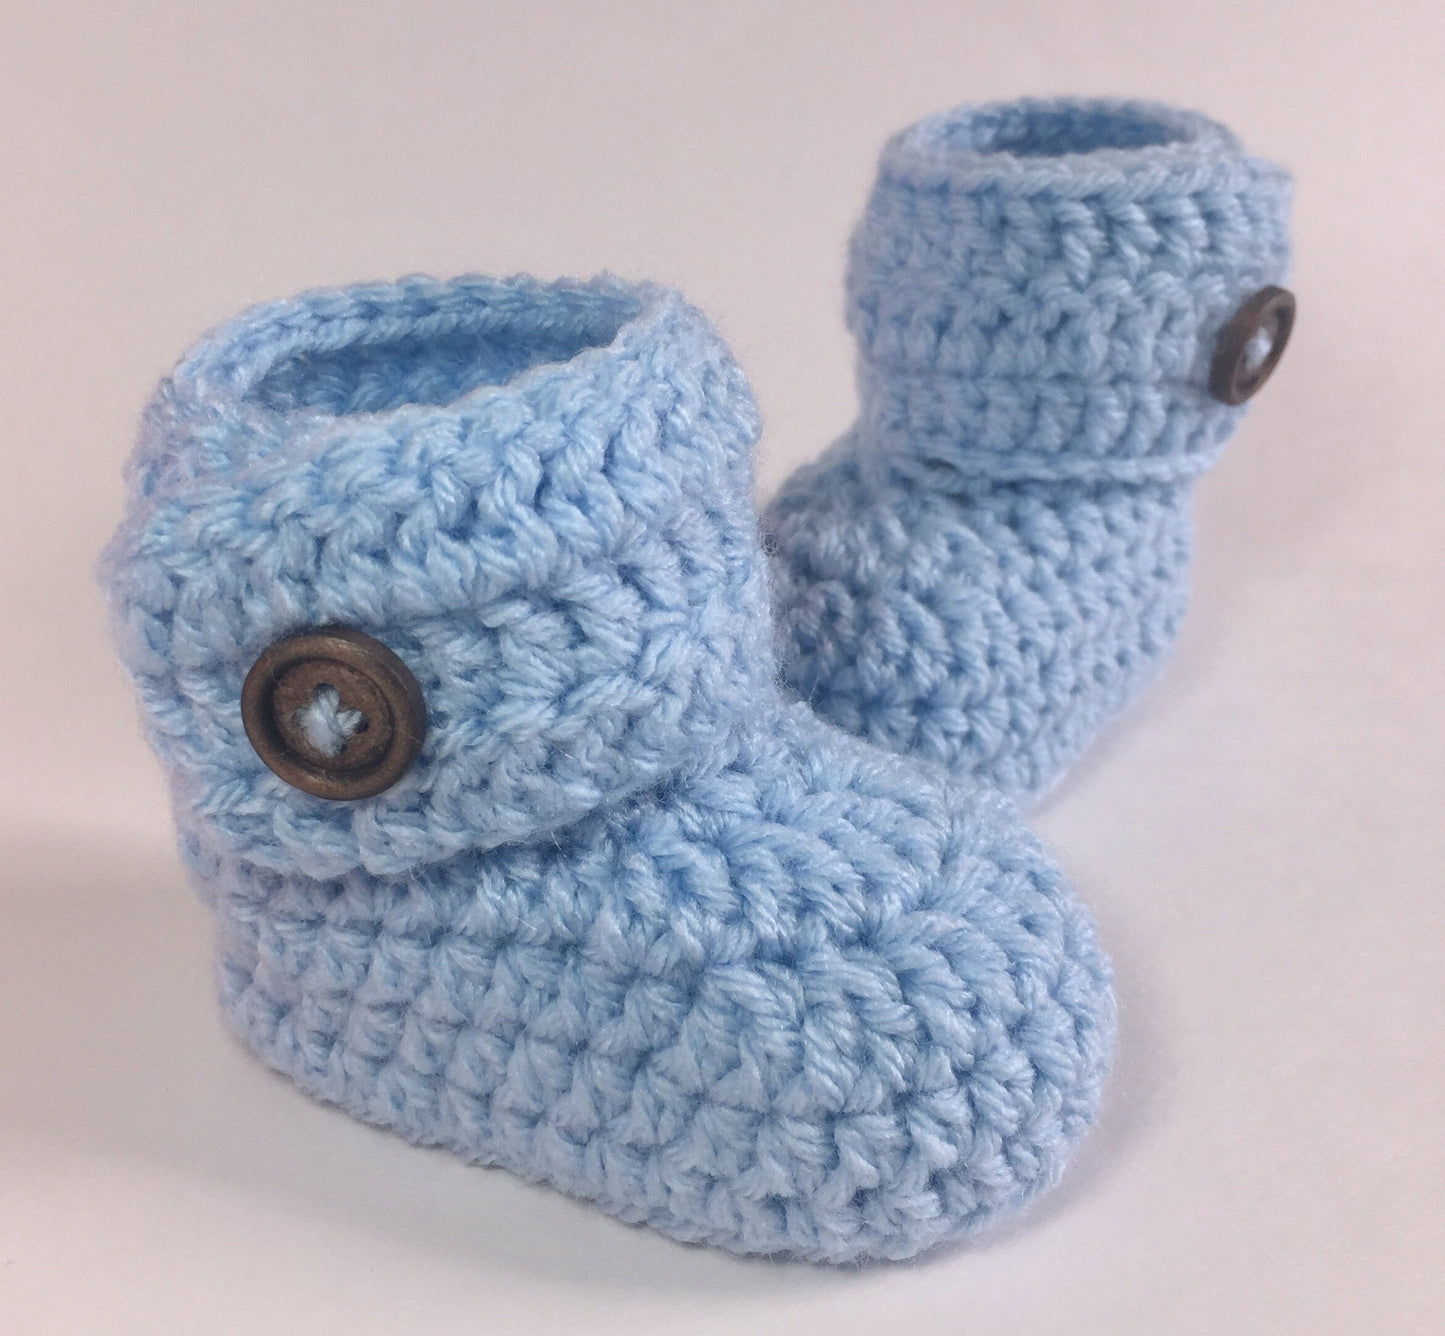 Wrapped Baby Booties Crochet Pattern (PDF - digital download)